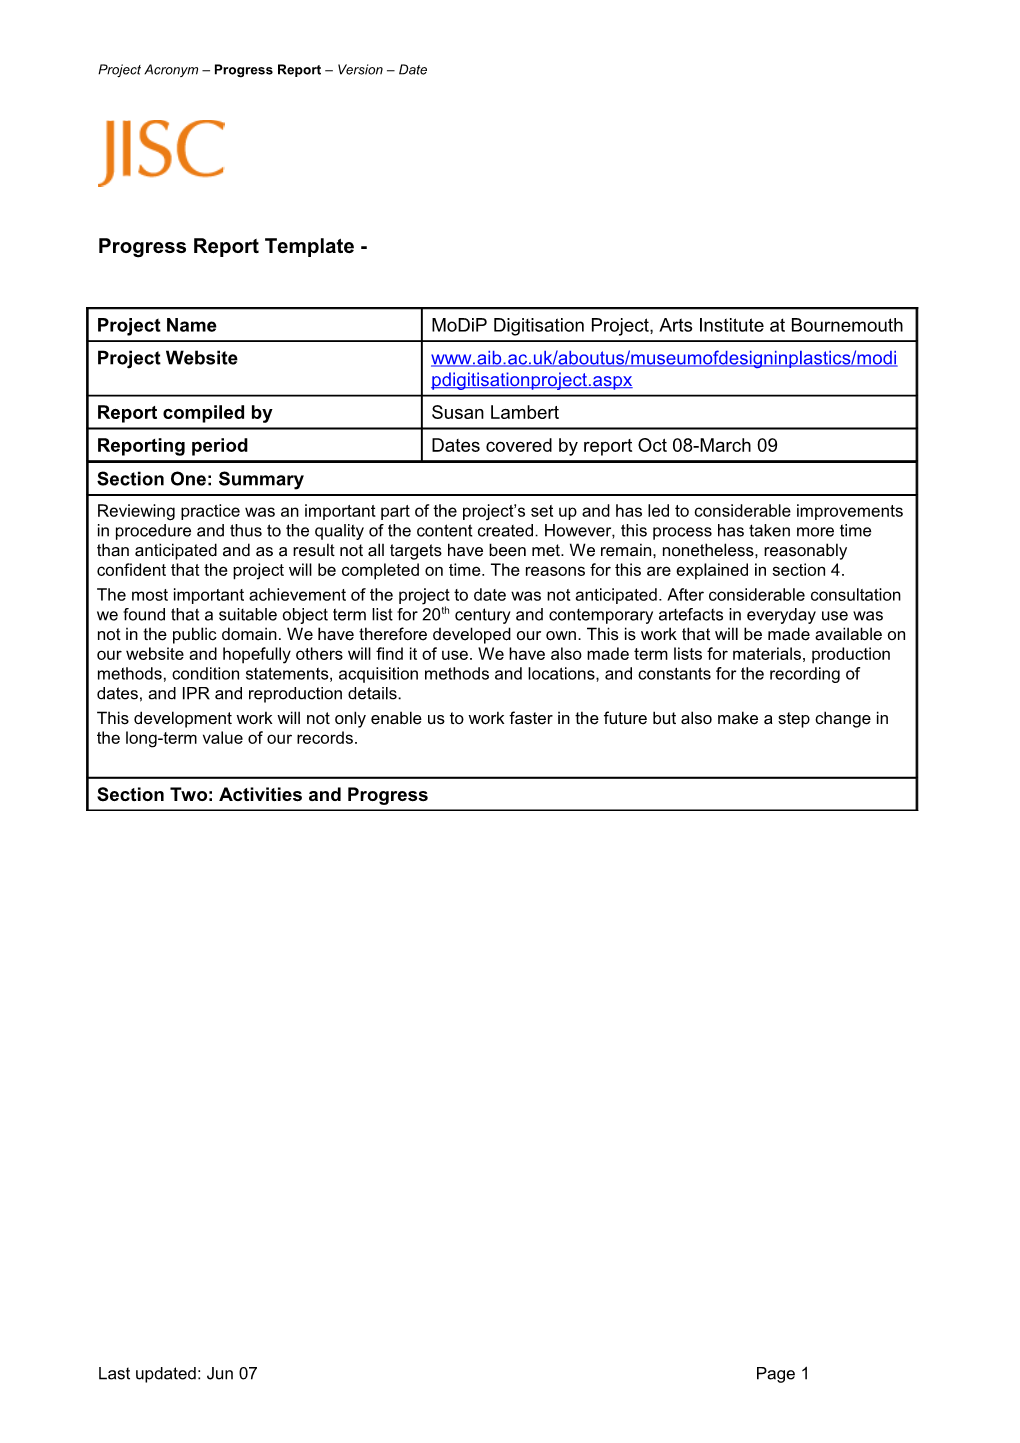 Modip JISC Progress Report